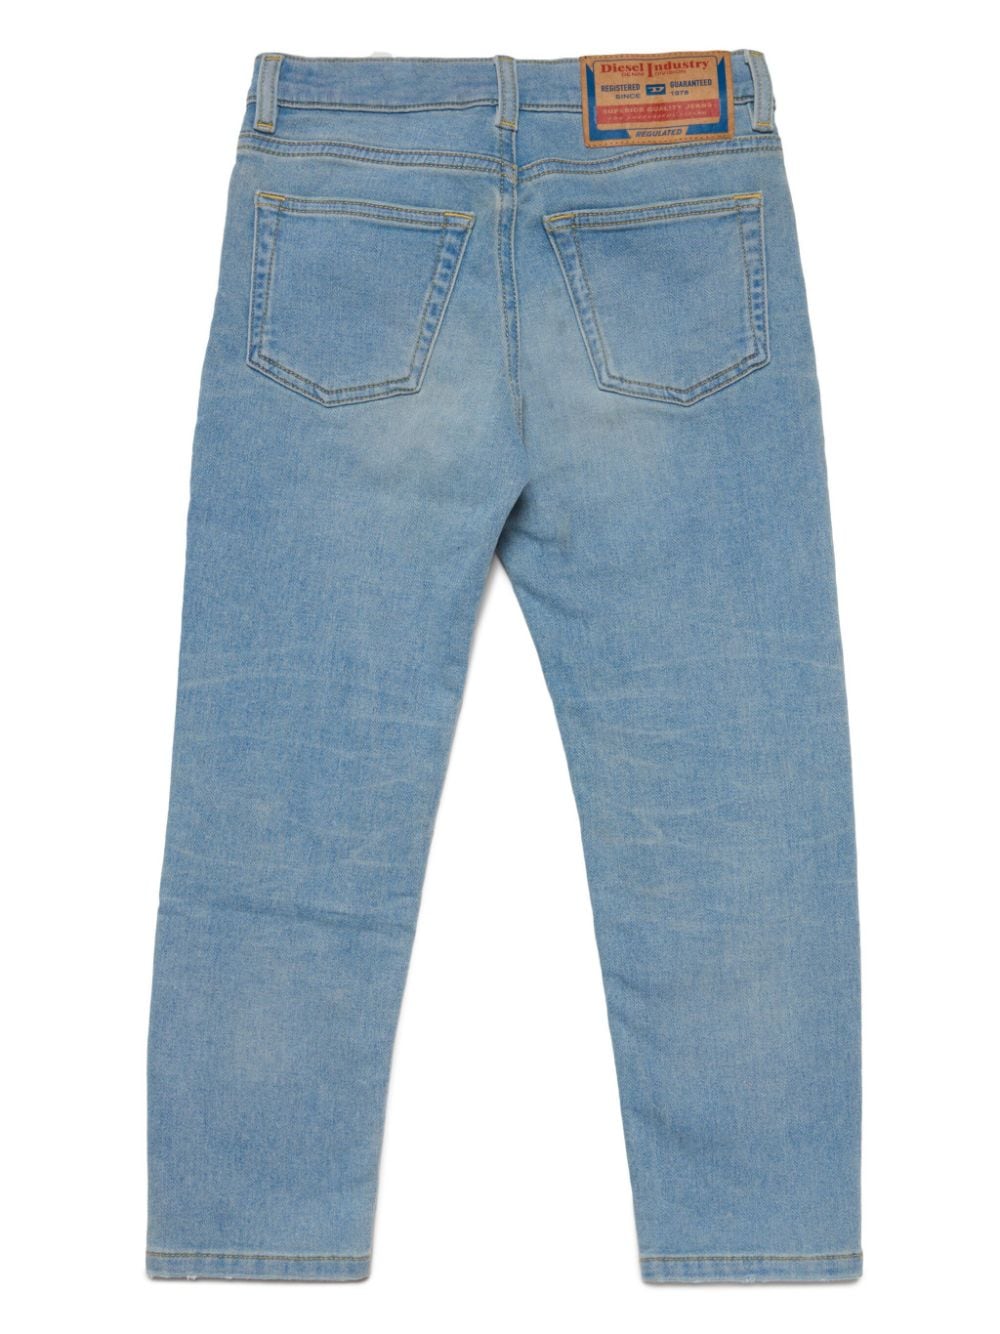 Image 2 of Diesel Kids jeans rectos con parche del logo